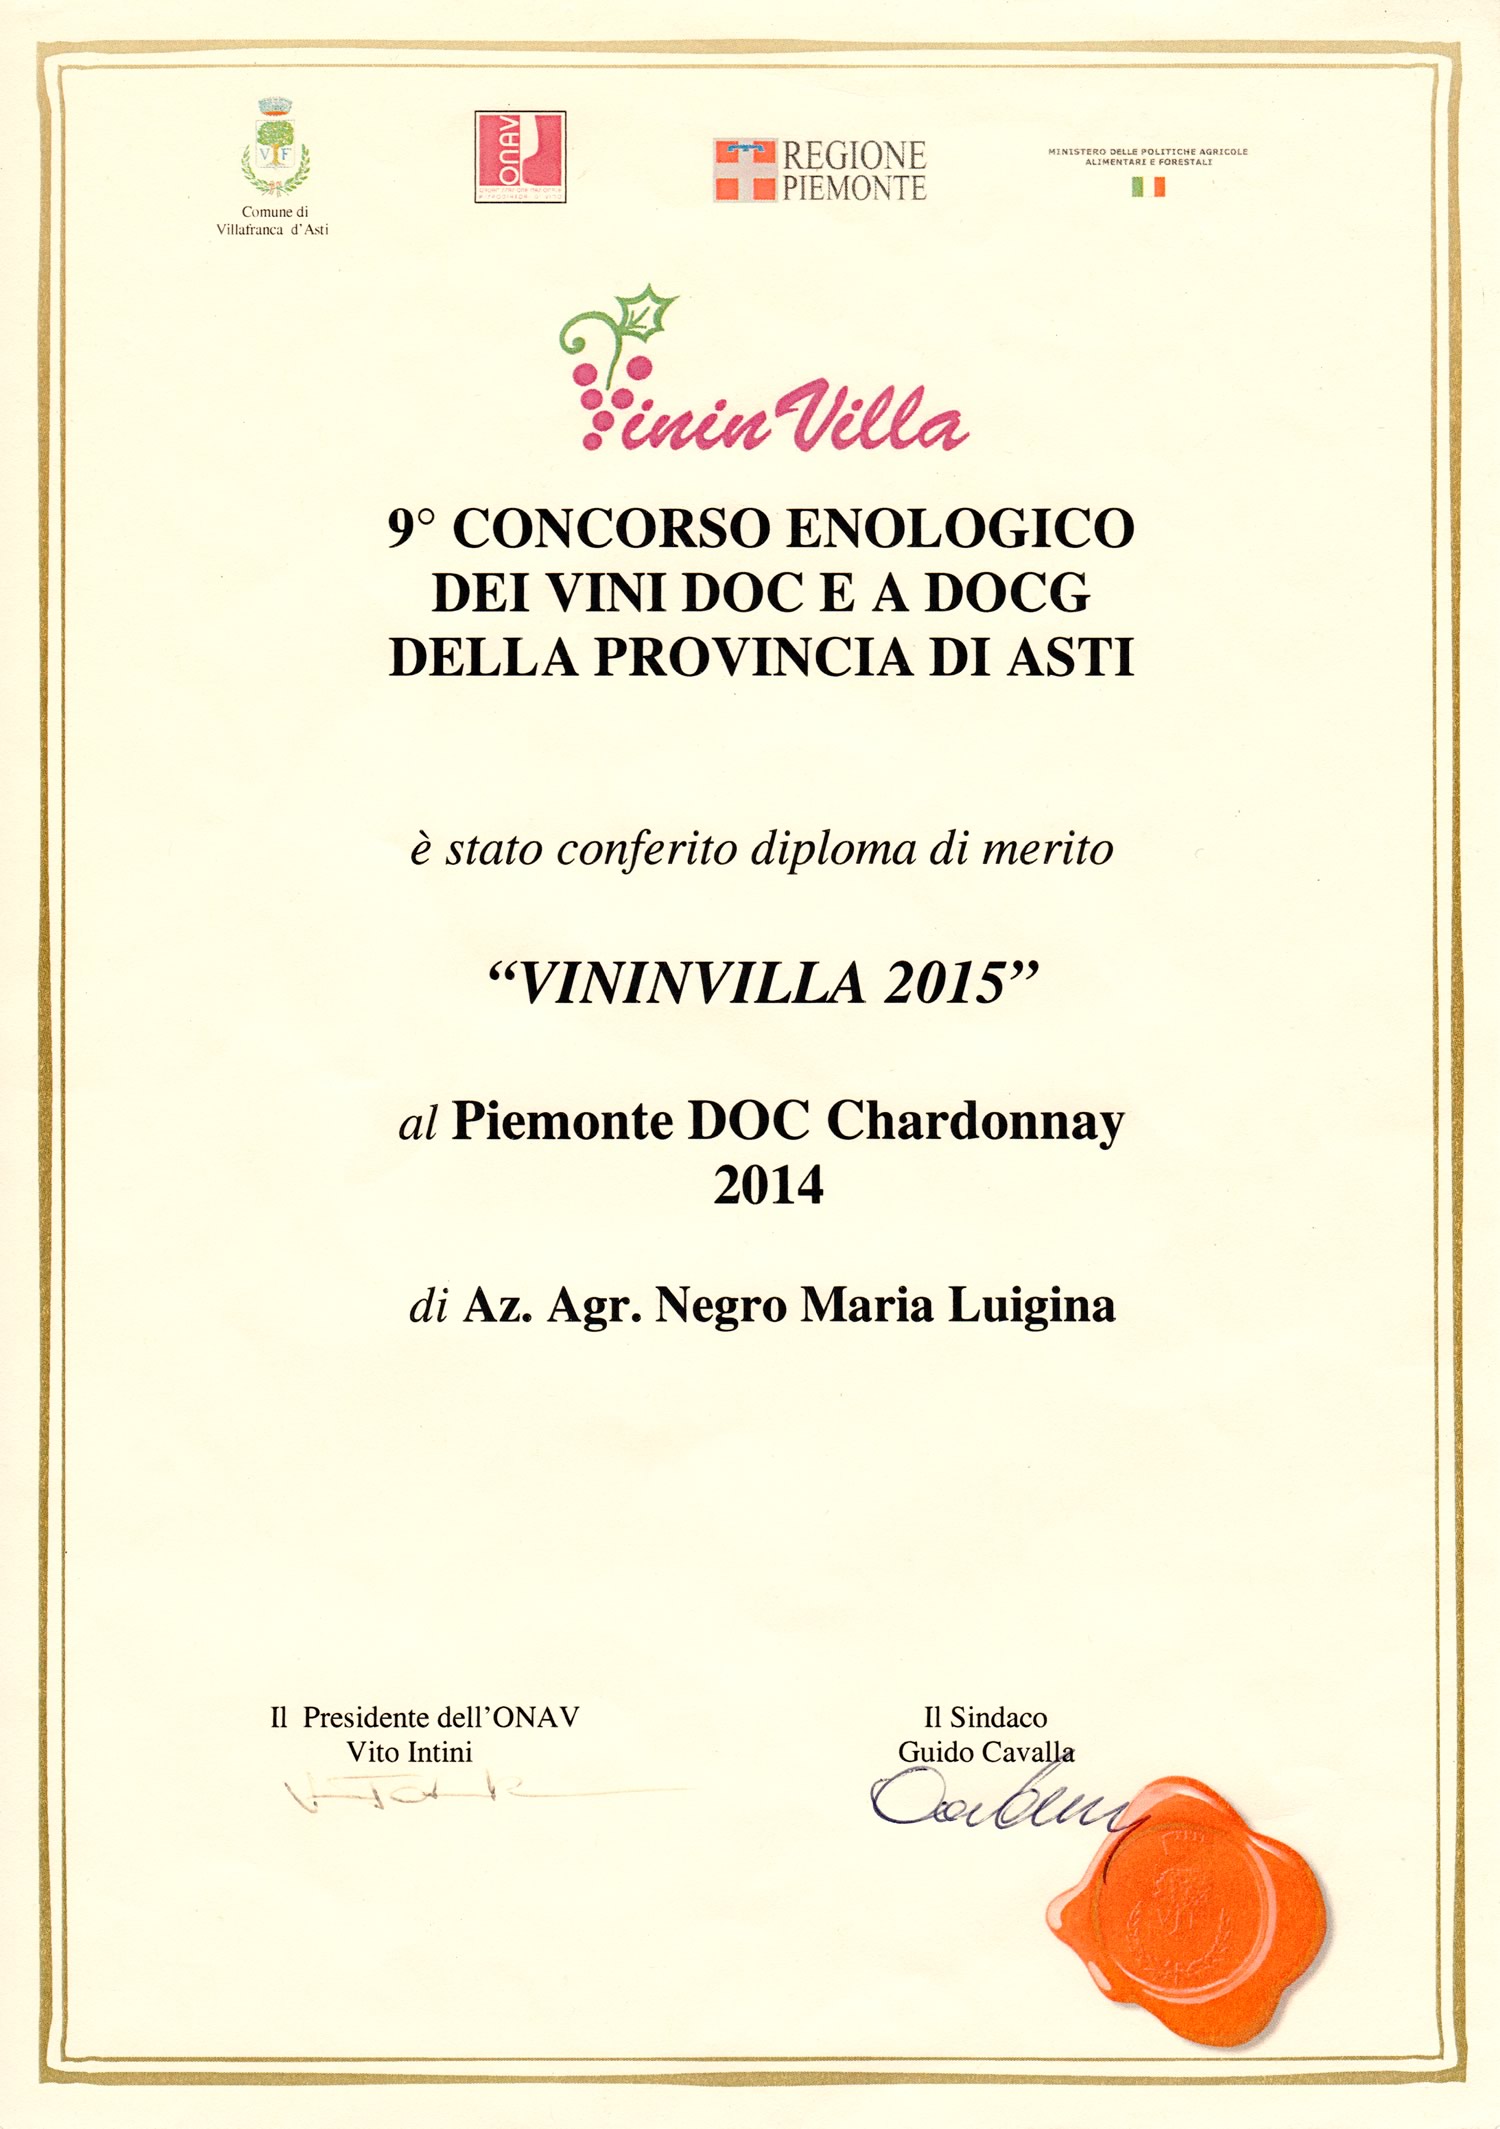 VininVilla 2015 - Piemonte D.O.C. Chardonnay 2014.